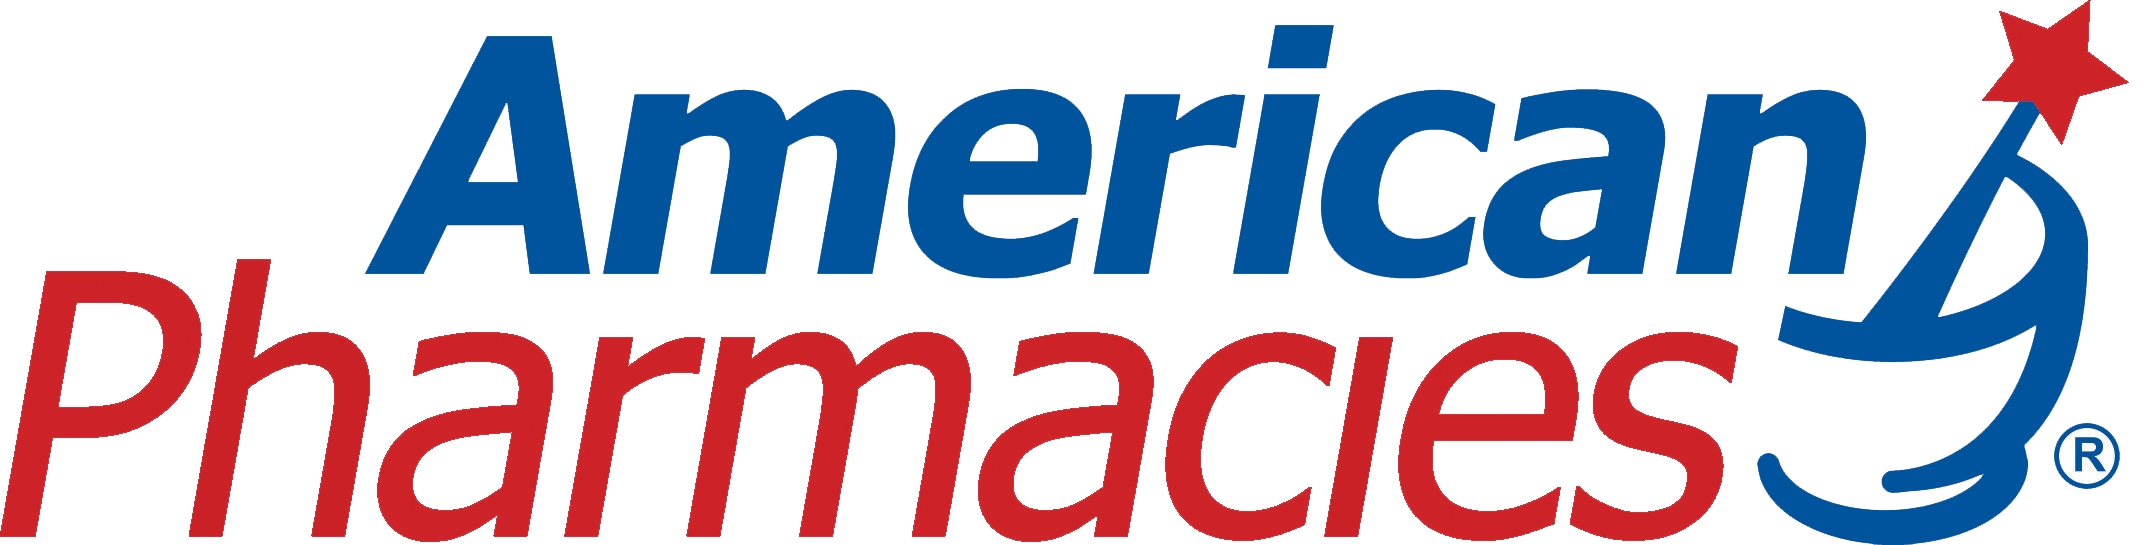 American Pharmacies Logo in color